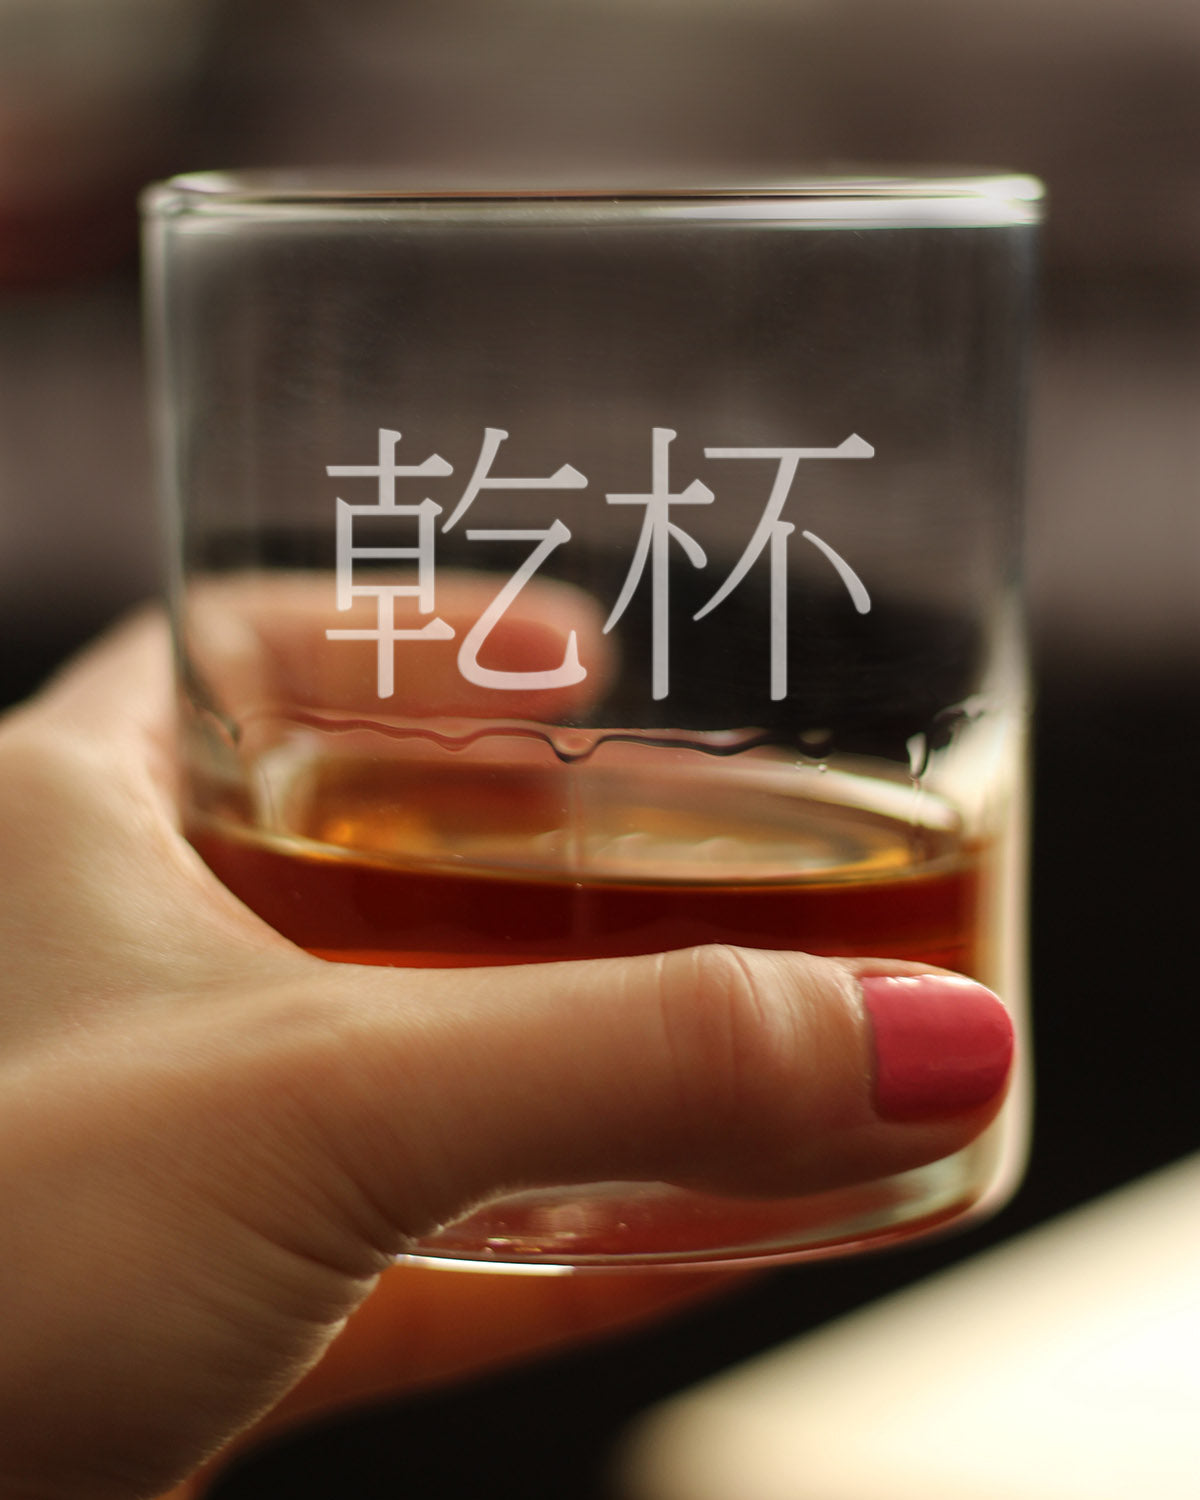 Cheers Japanese - 乾杯 - Kanpai - 10 Ounce Rocks Glass